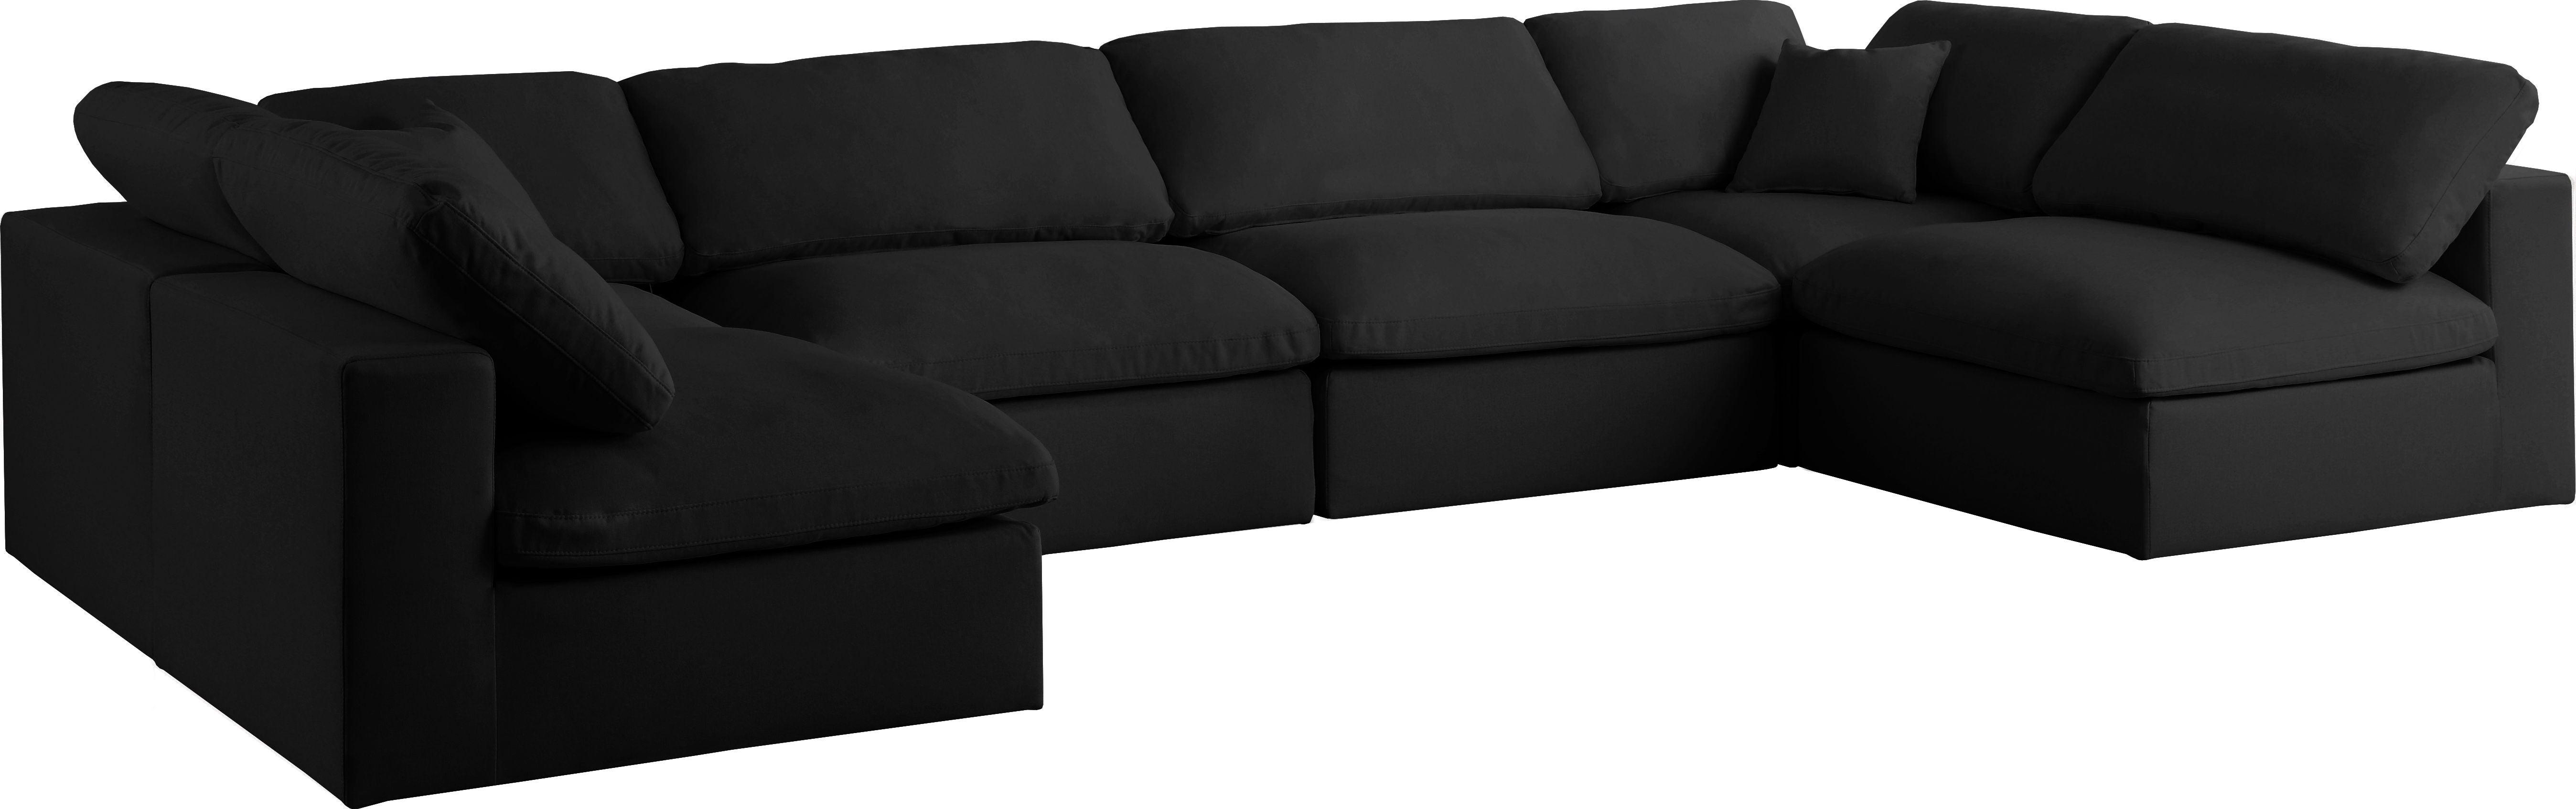 Meridian Furniture - Serene - Linen Textured Fabric Deluxe Comfort Modular Sectional 6 Piece - Black - Fabric - 5th Avenue Furniture